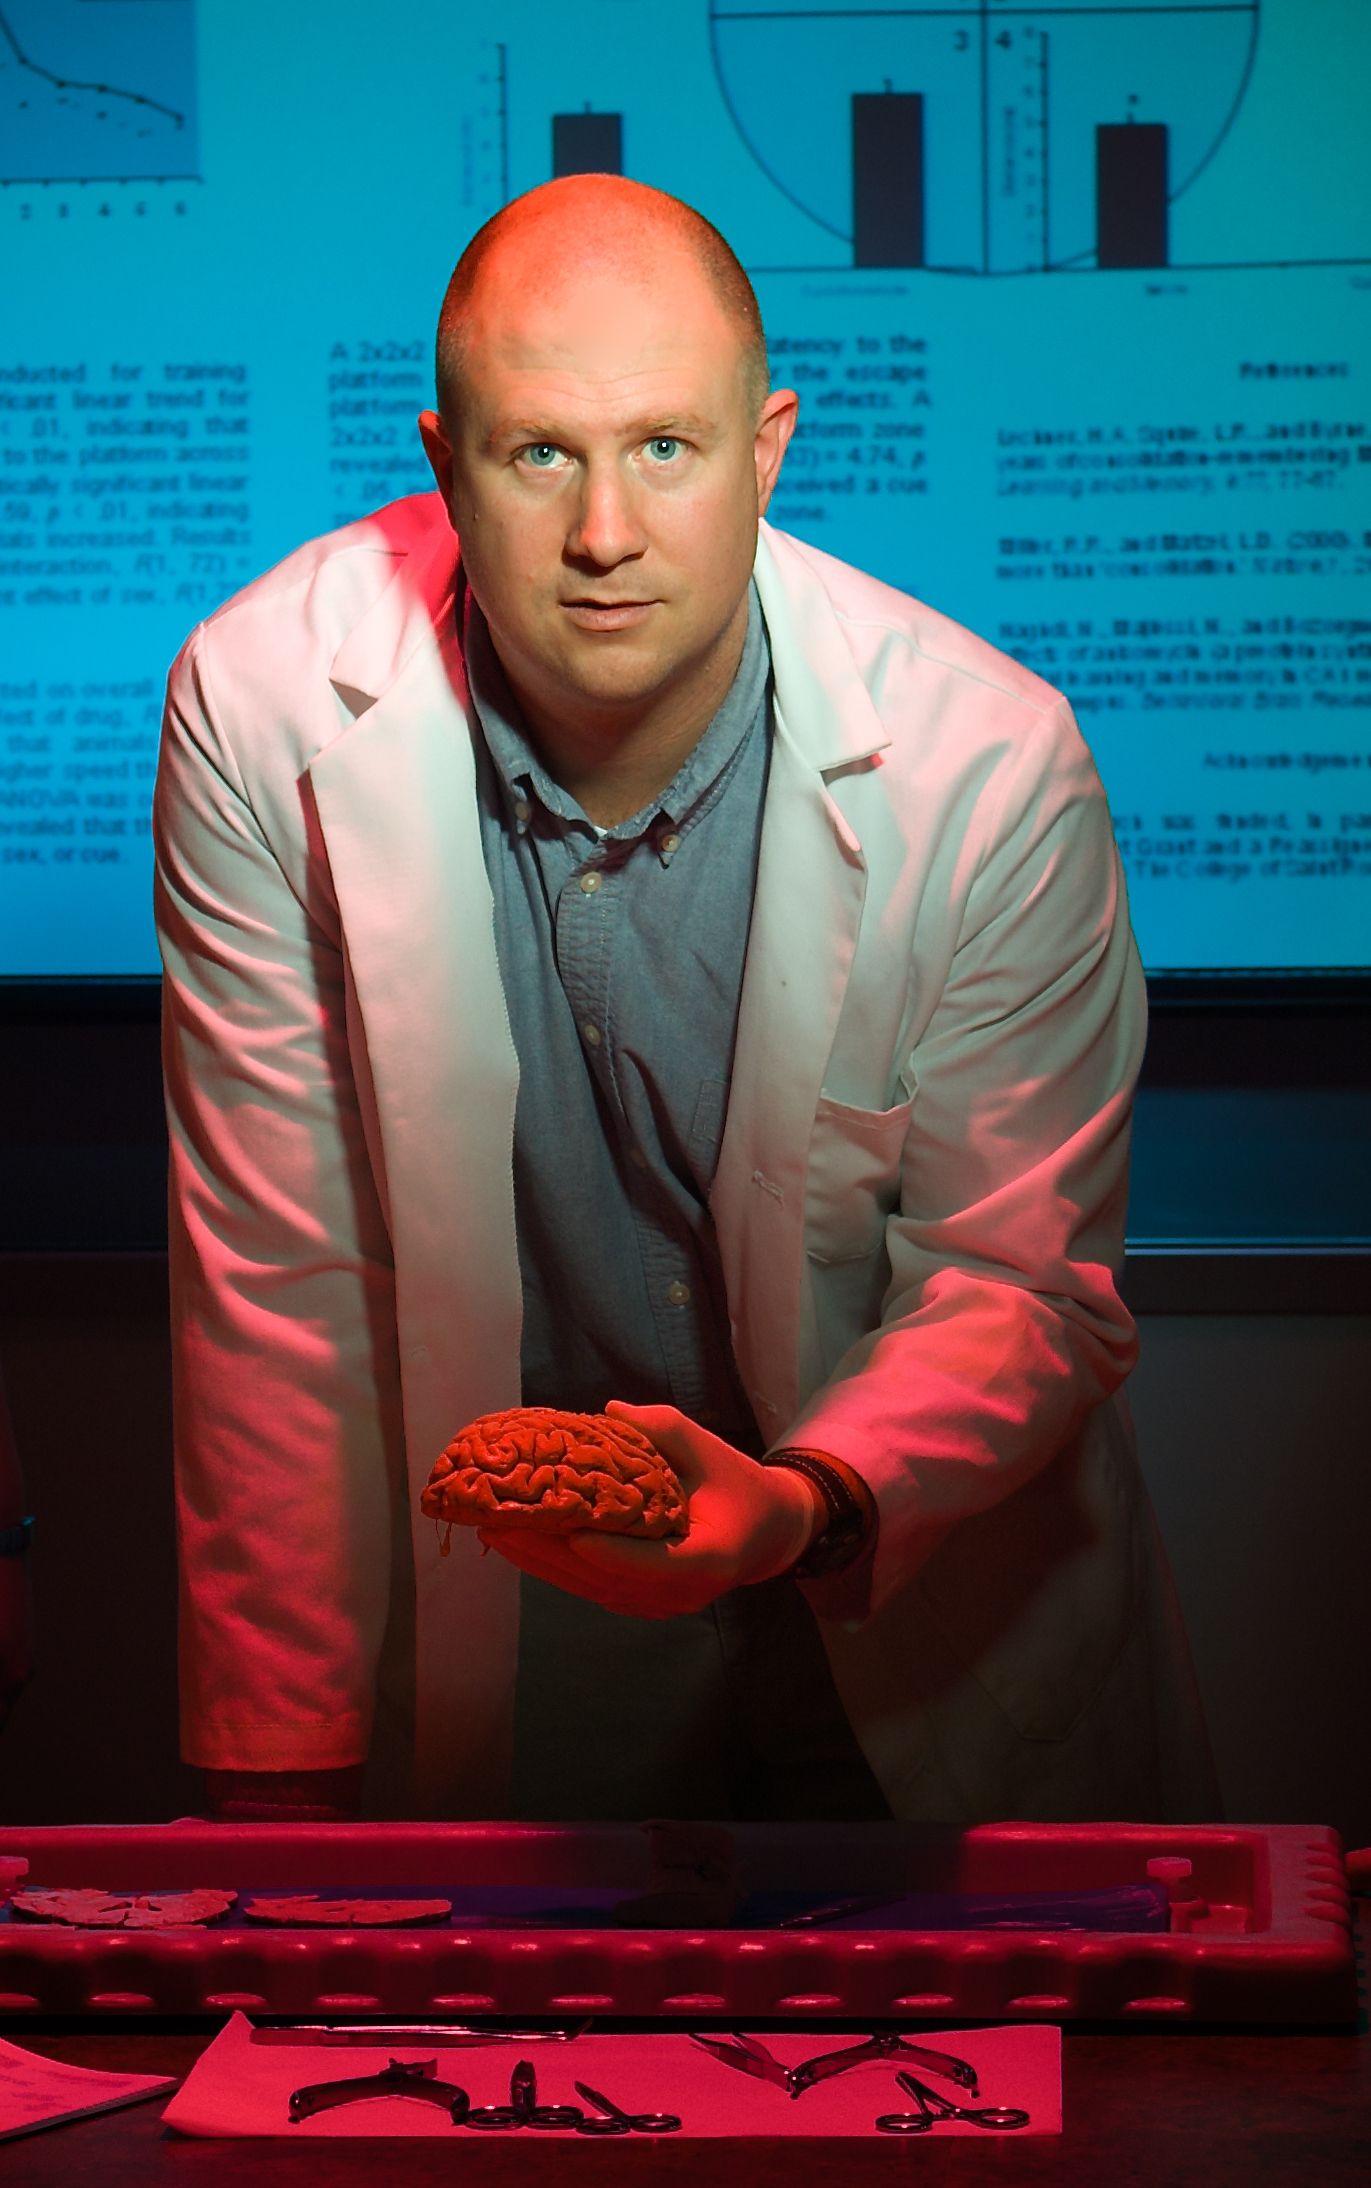 Professor holds human brain